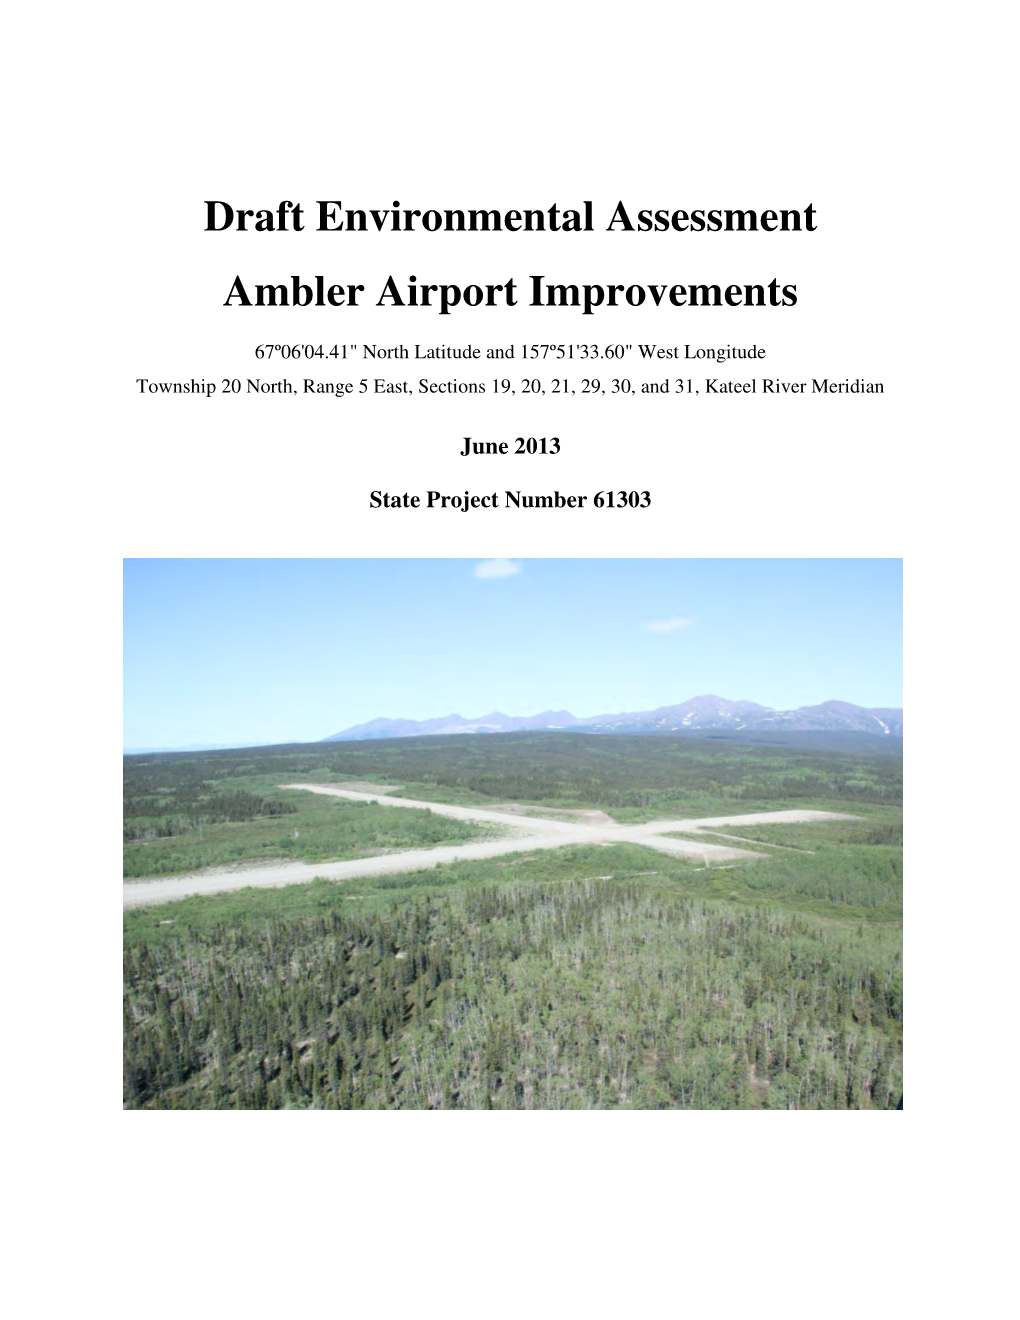 Draft Environmental Assessment Ambler Airport Improvements